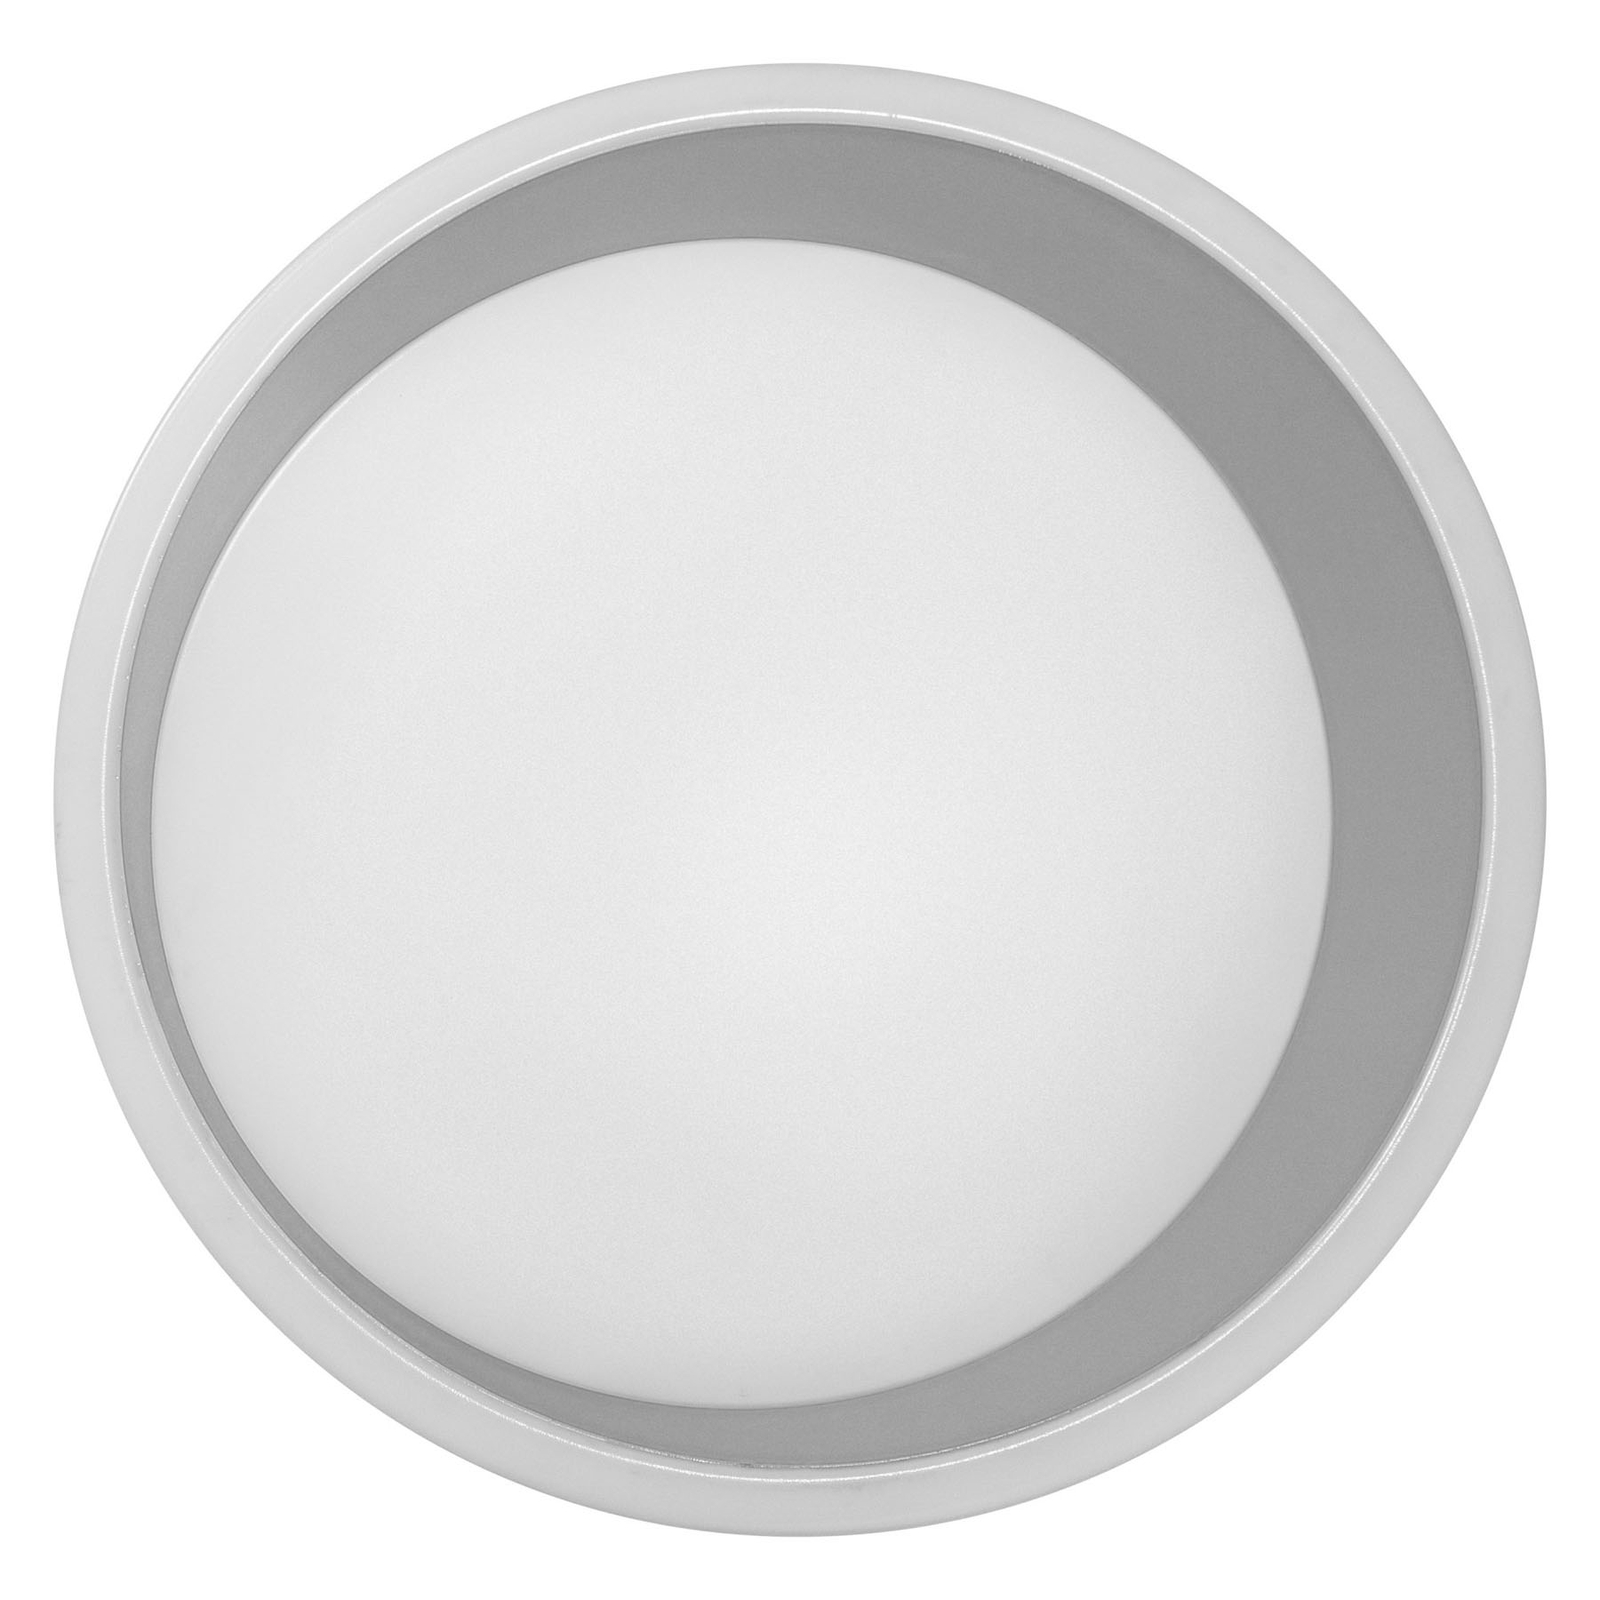 LEDVANCE SMART+ WiFi Orbis Moon CCT 48 cm harmaa